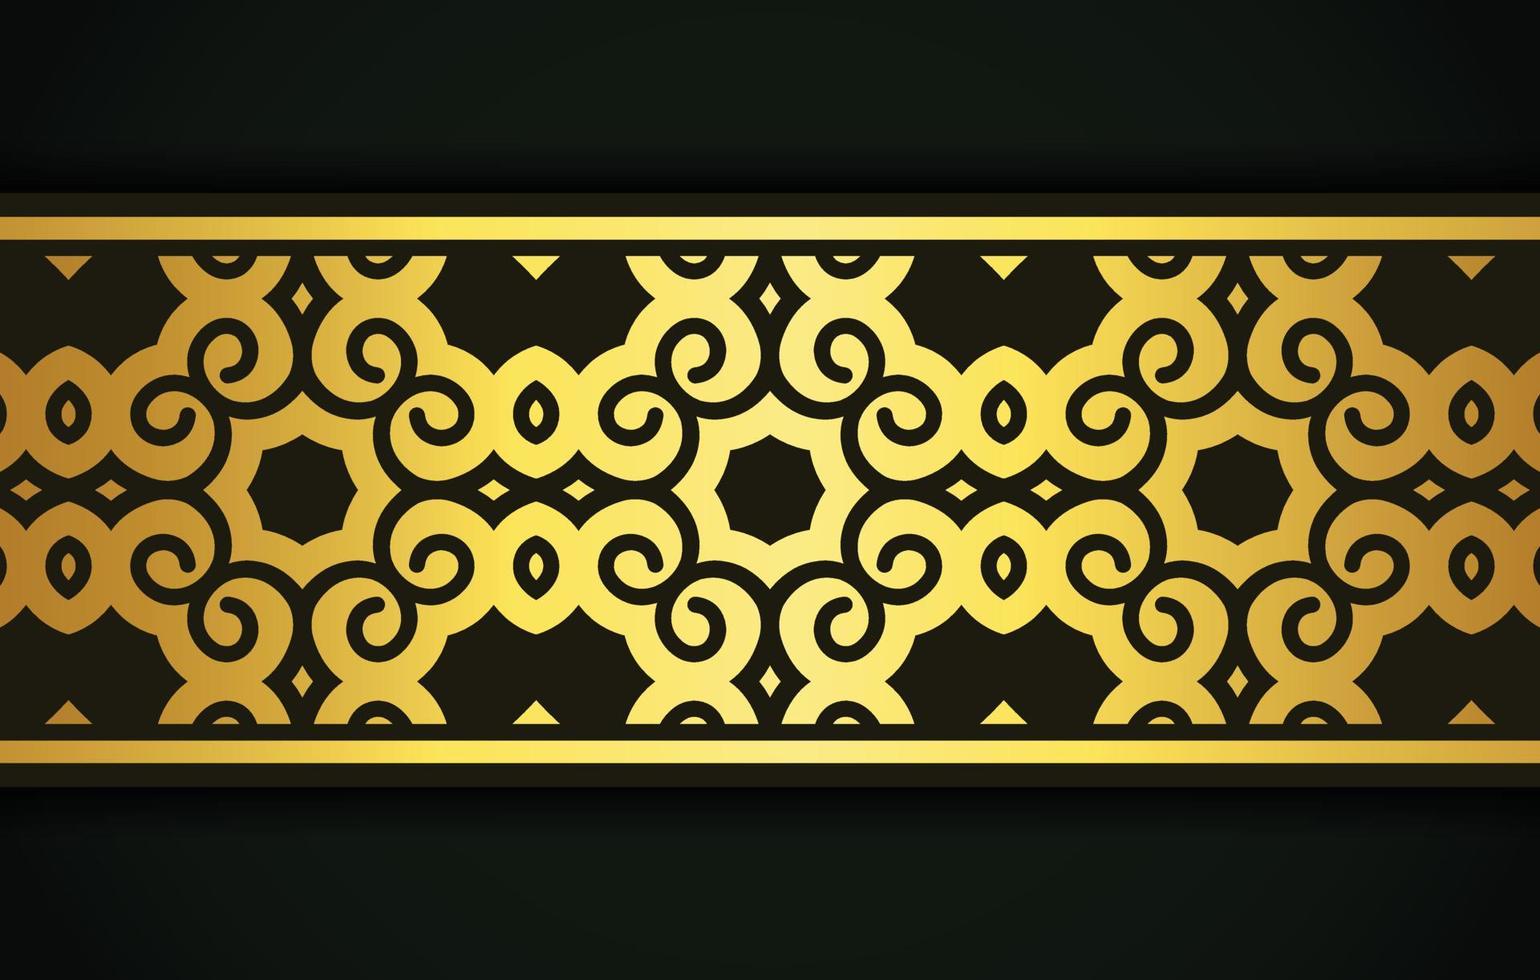 modelo de borda ornamental dourada elegante vetor